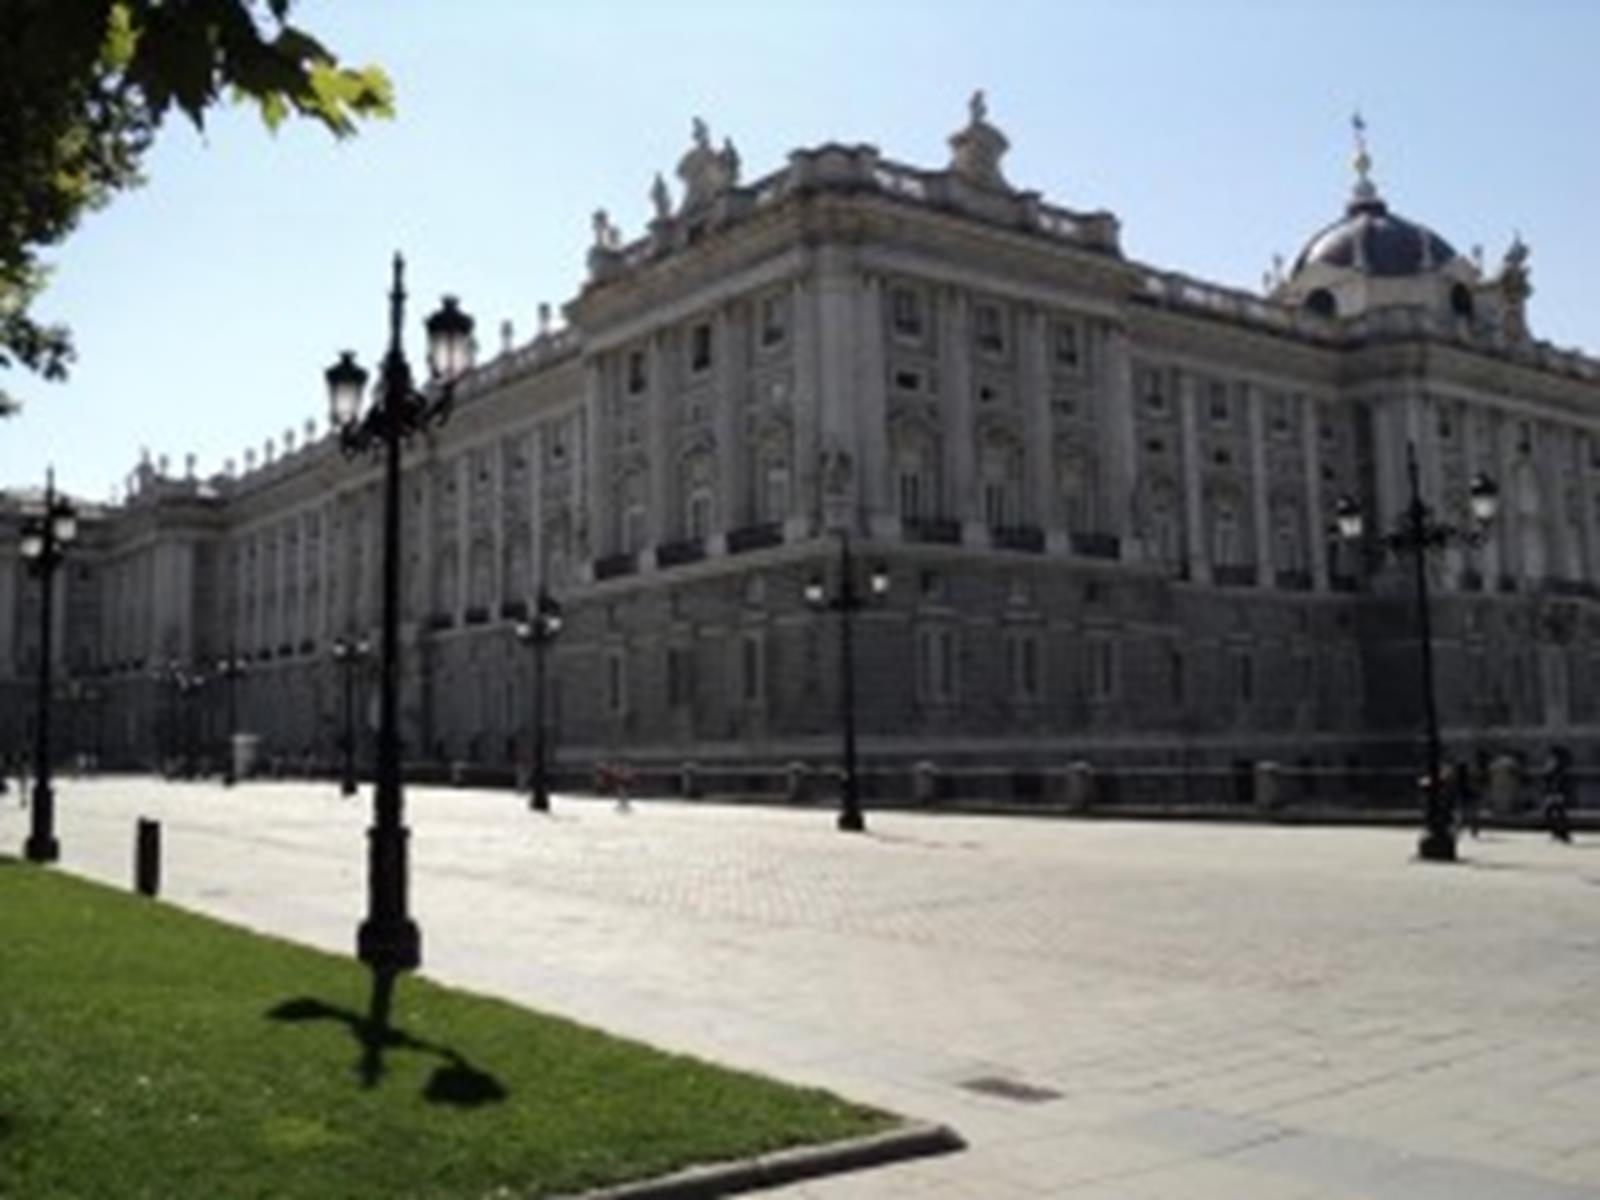 Palacio Real, Madrid.